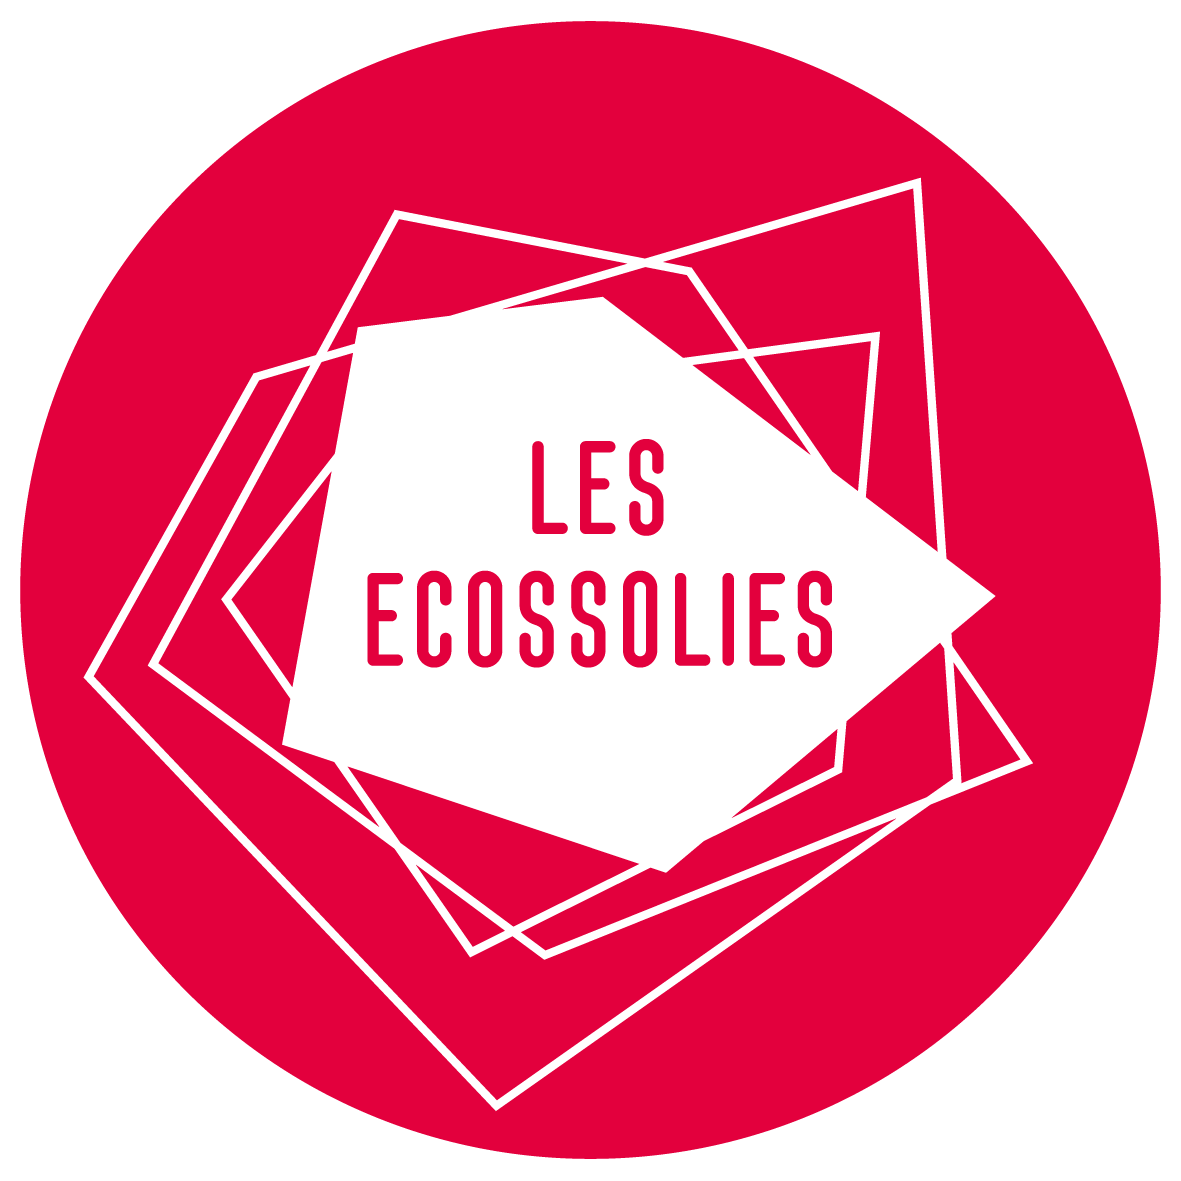 Ecossolies